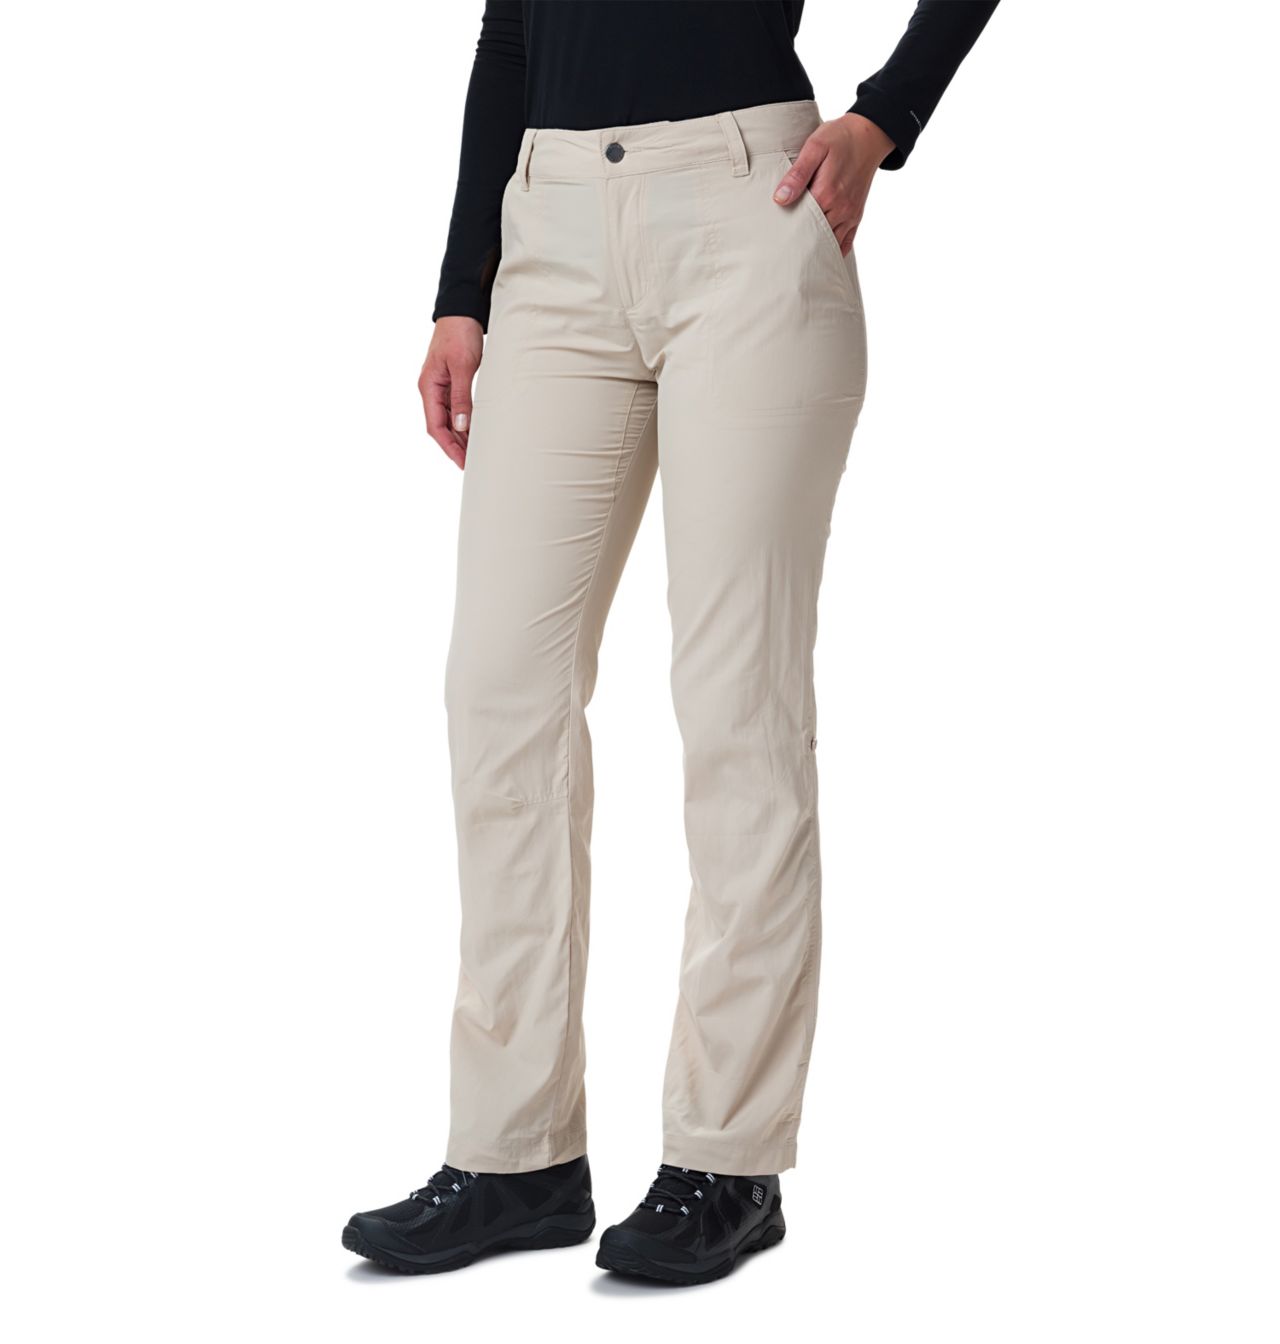 Columbia Silver Ridge 2.0 Pant - Walking trousers - Women's